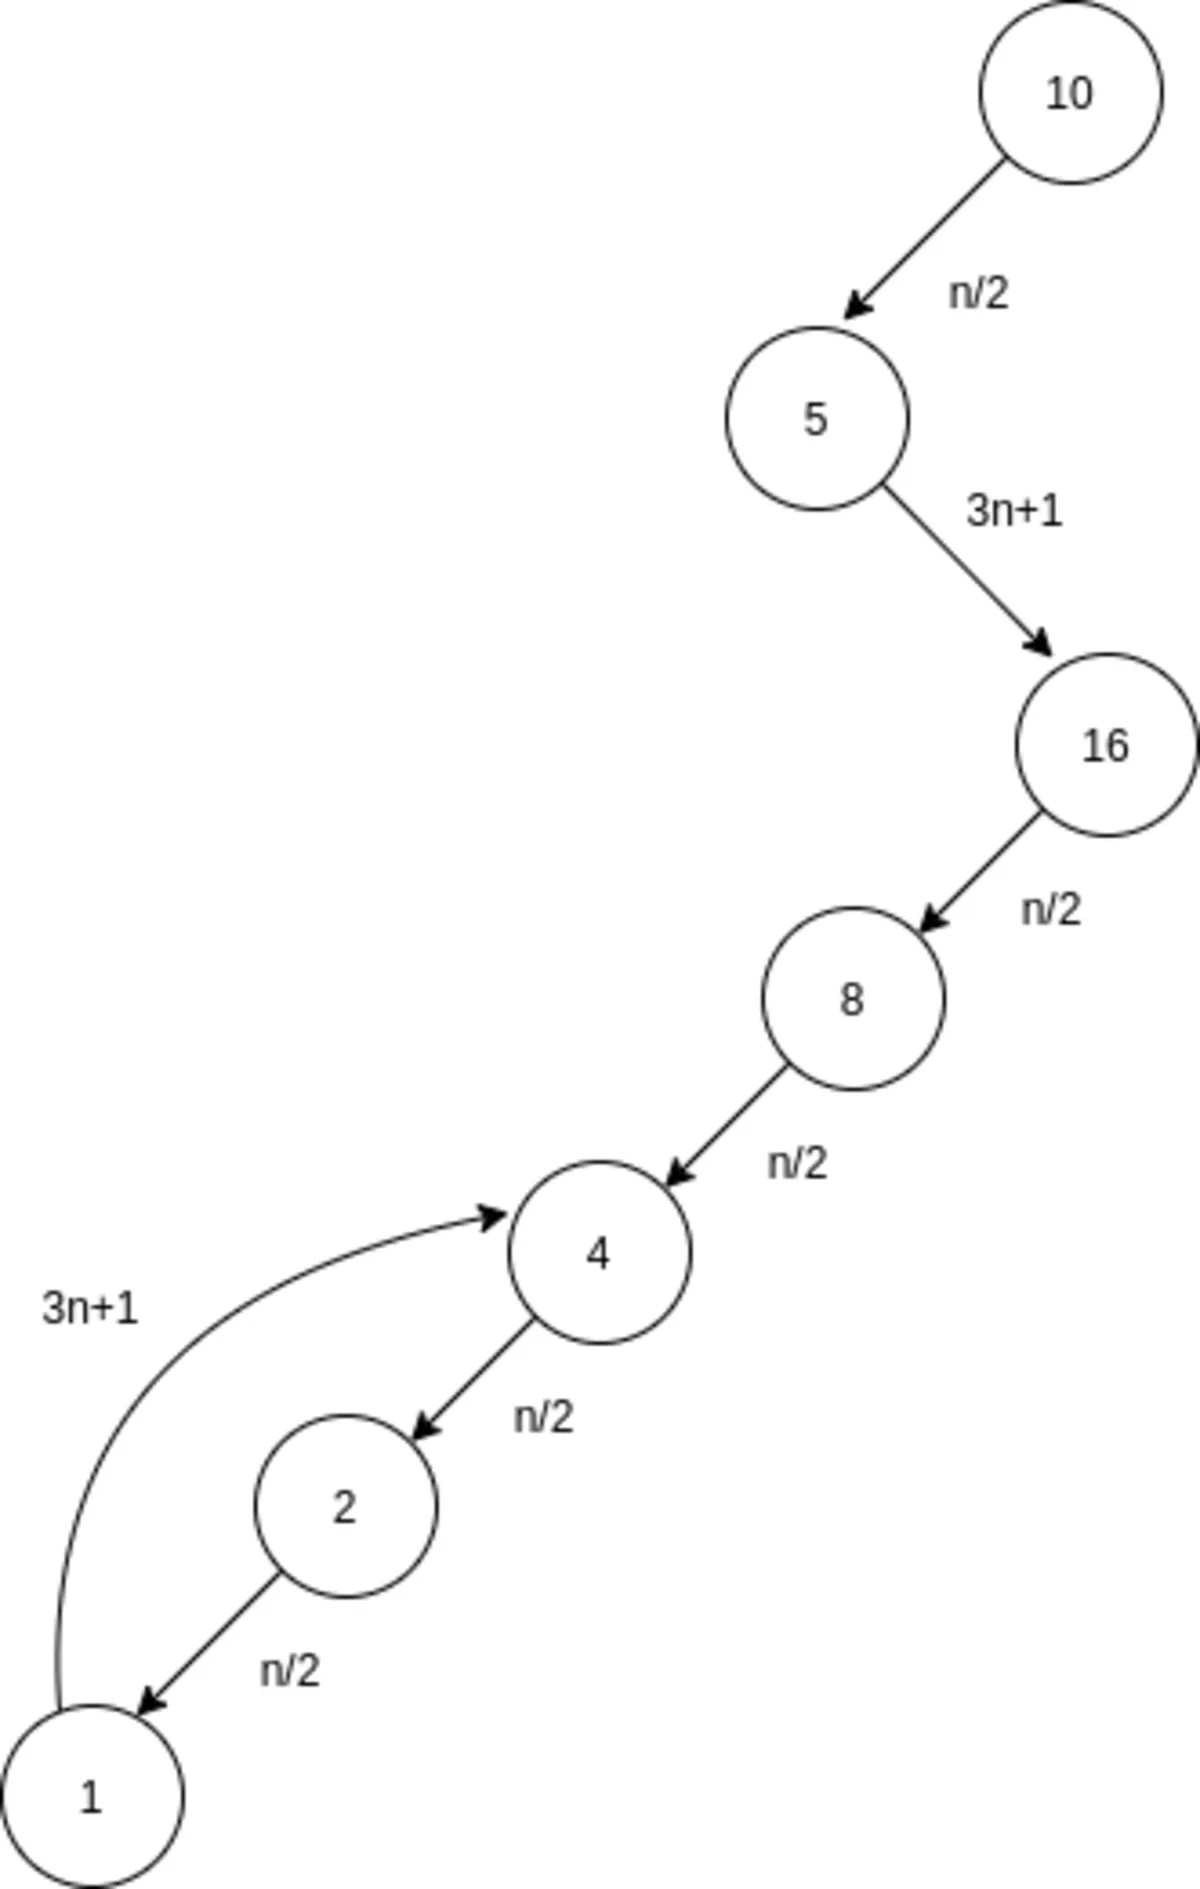 مثال حدس کولاتز / Collatz Conjecture